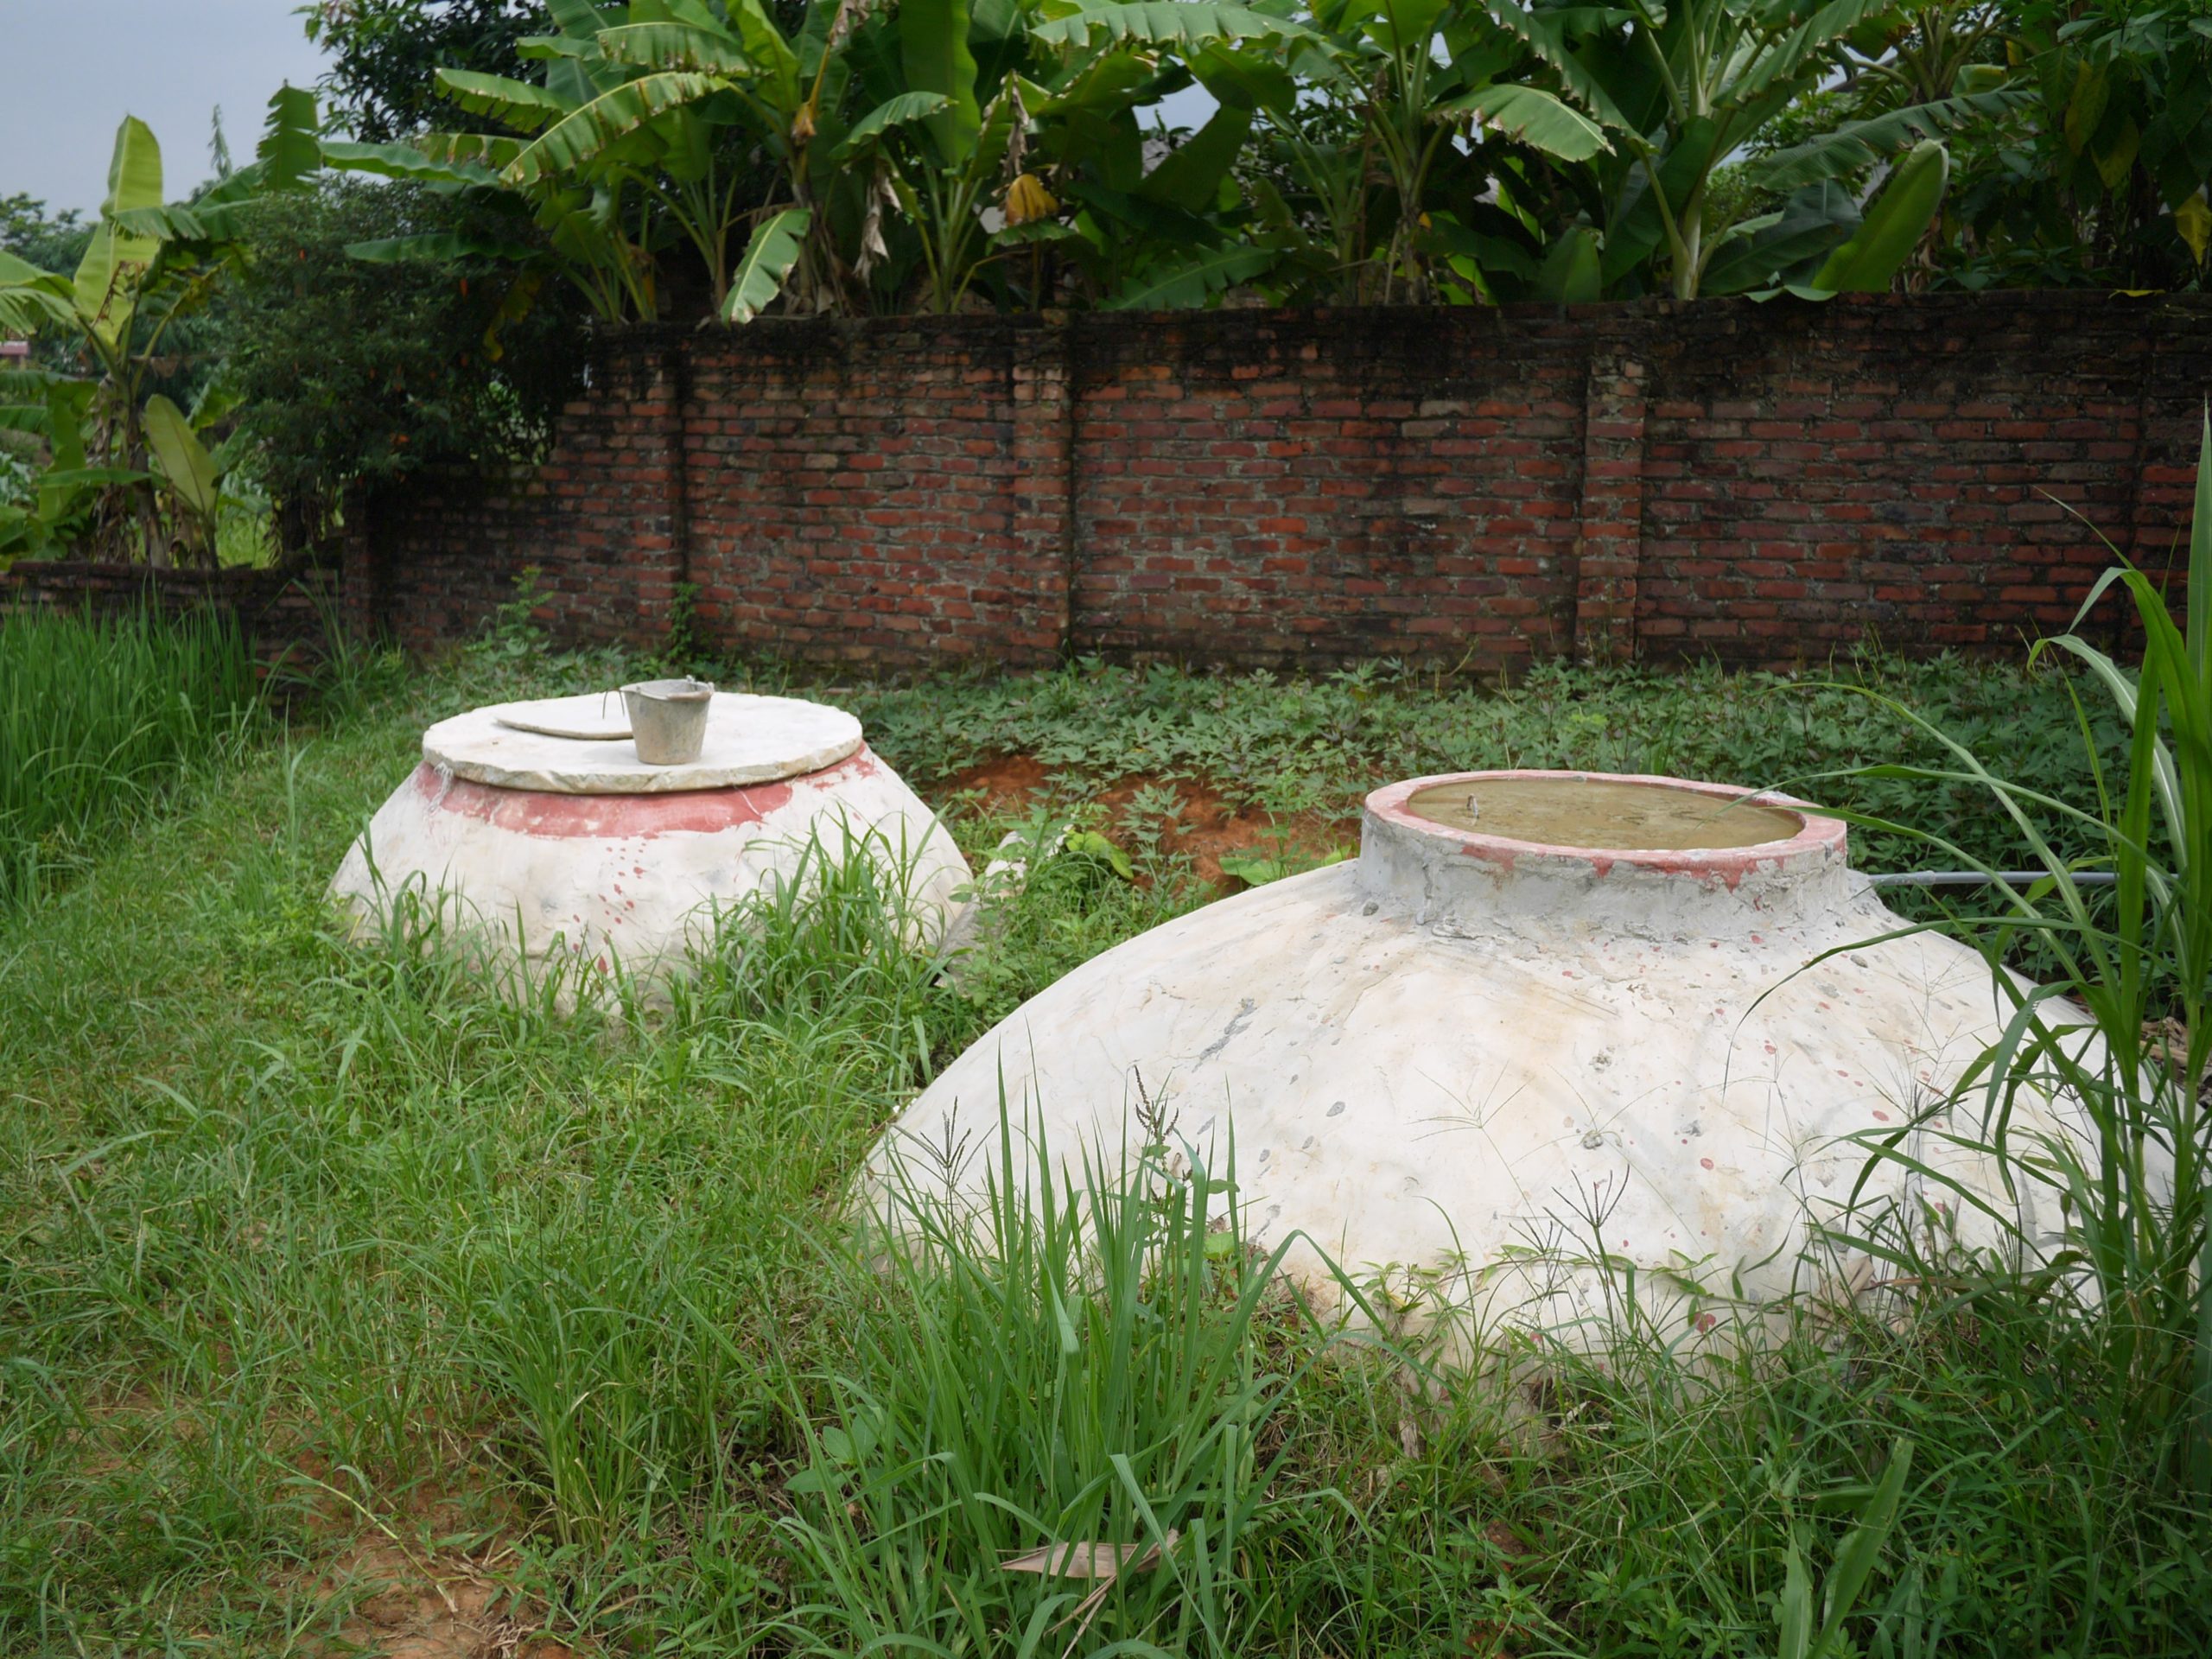 CO2 compensation through biogas plant in Vietnam